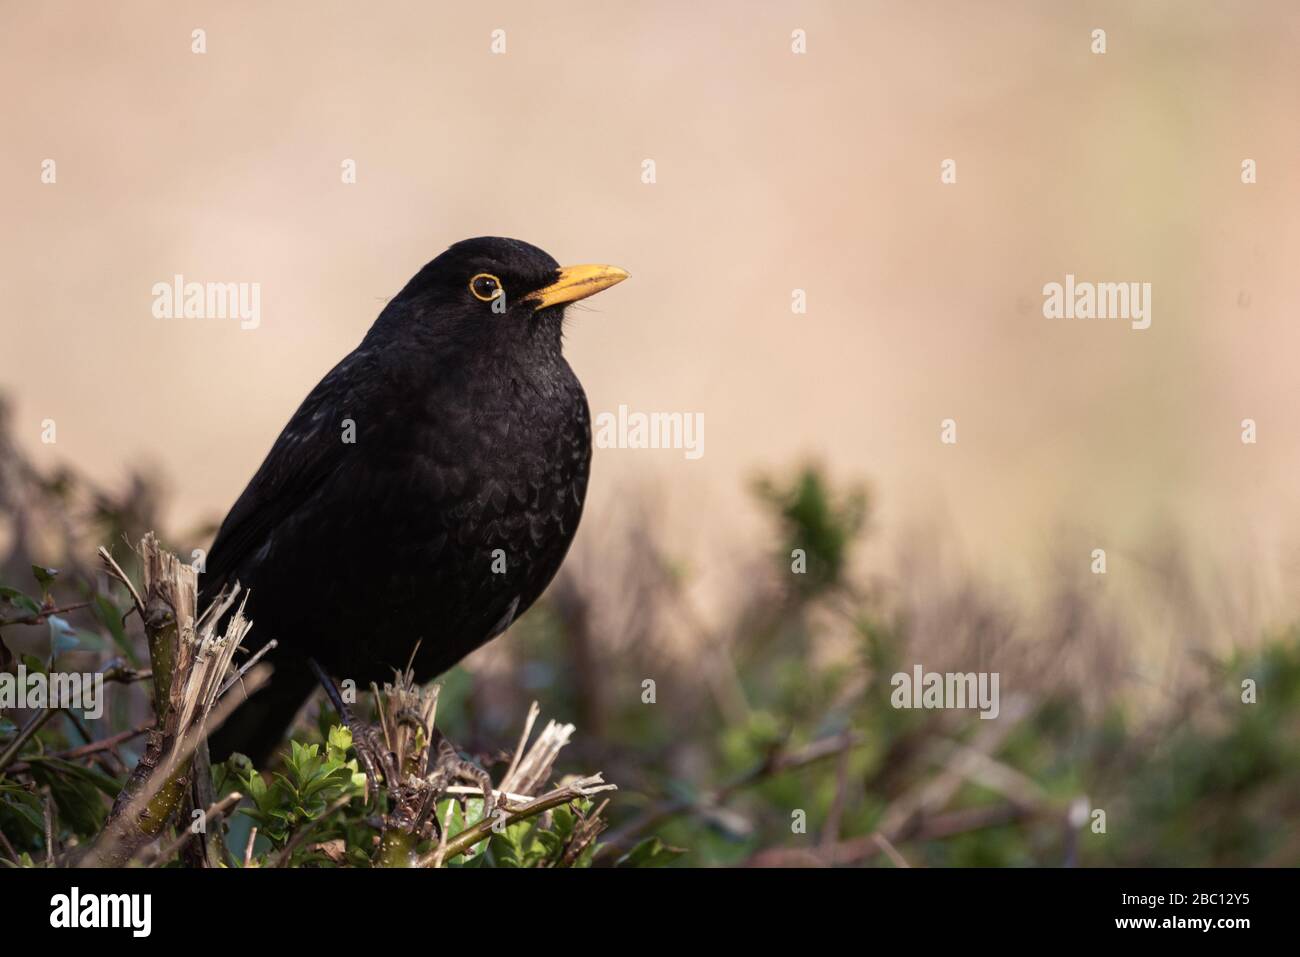 UK Wildlife - blackbird in natural surroundings - Towcester, Northamptonshire, UK Stock Photo